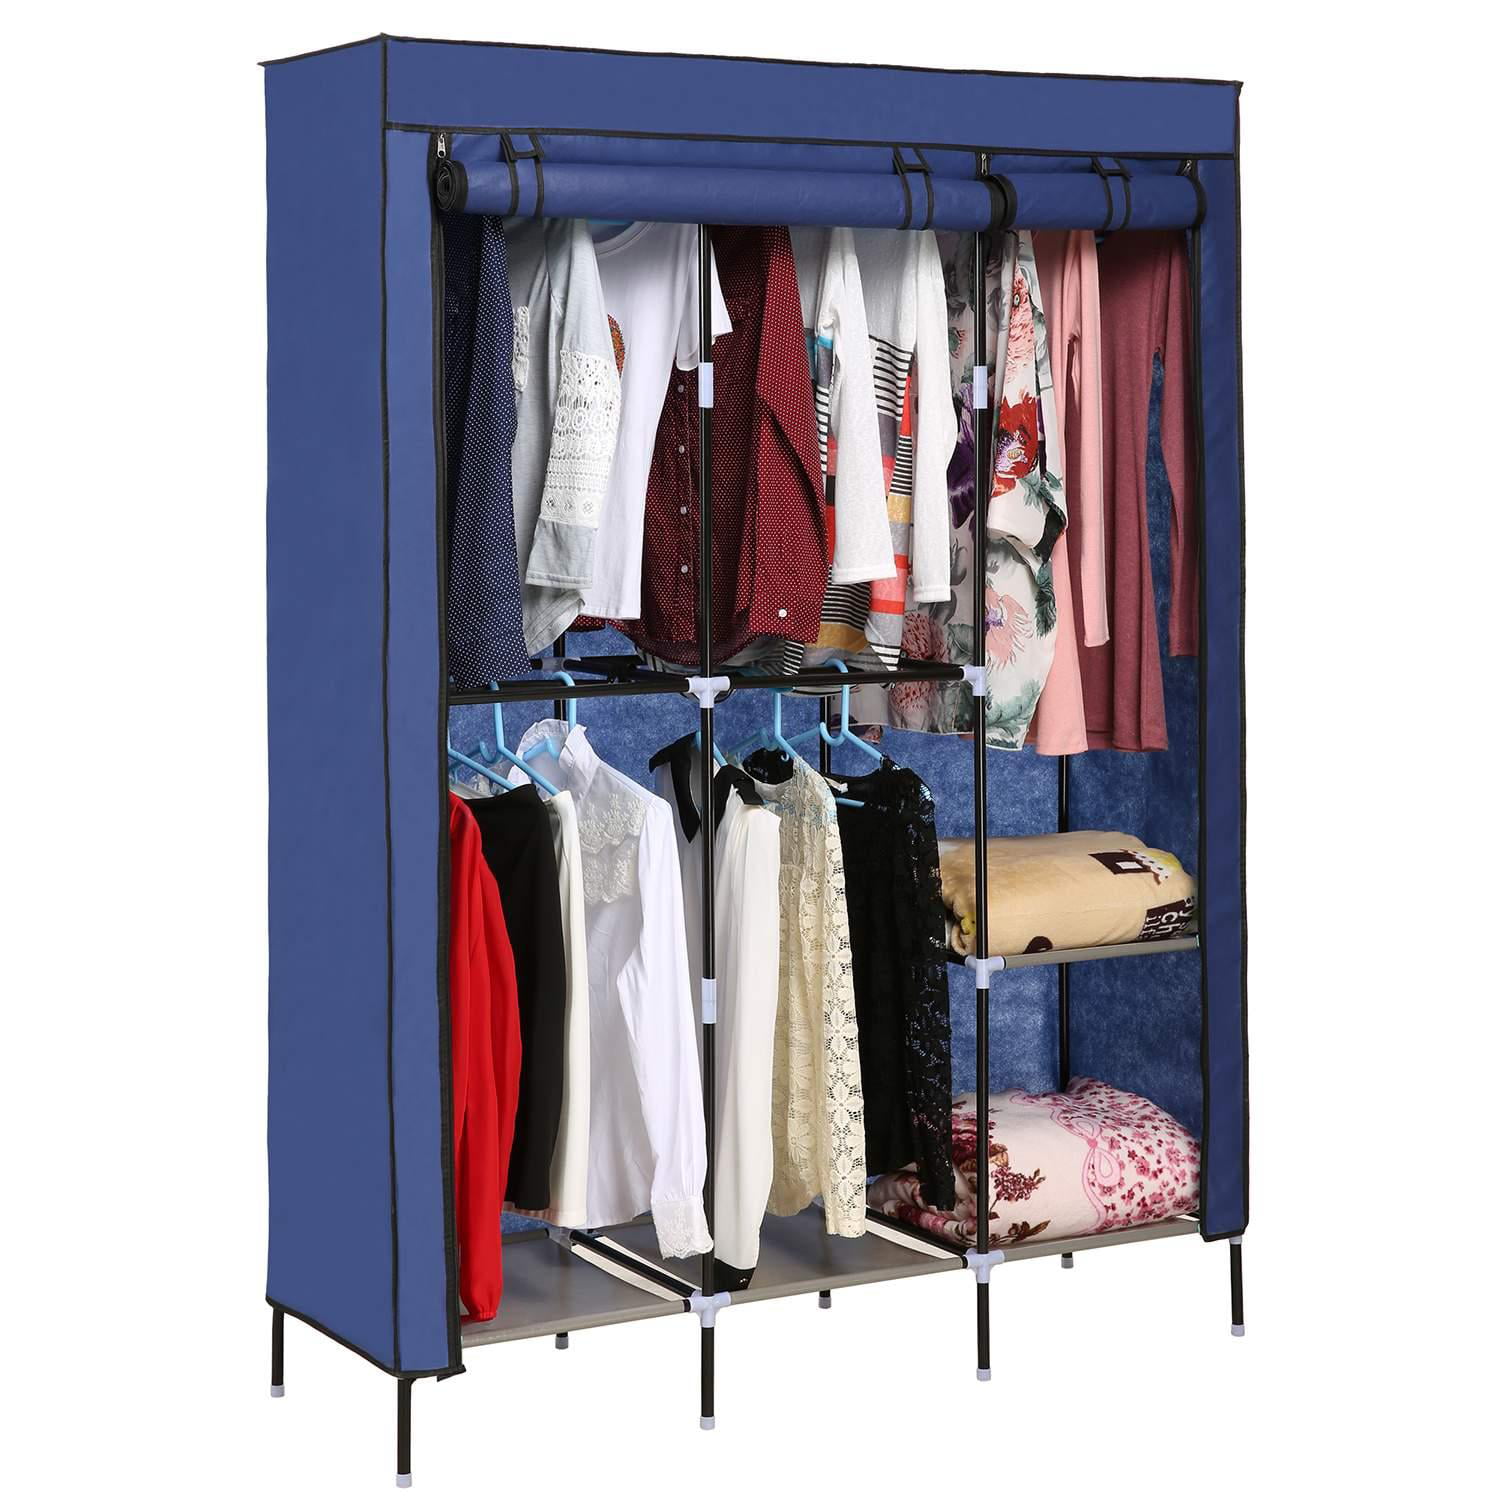 Portable Wardrobe Clothes Closet Durable Non-woven Fabric Storage Organizer 